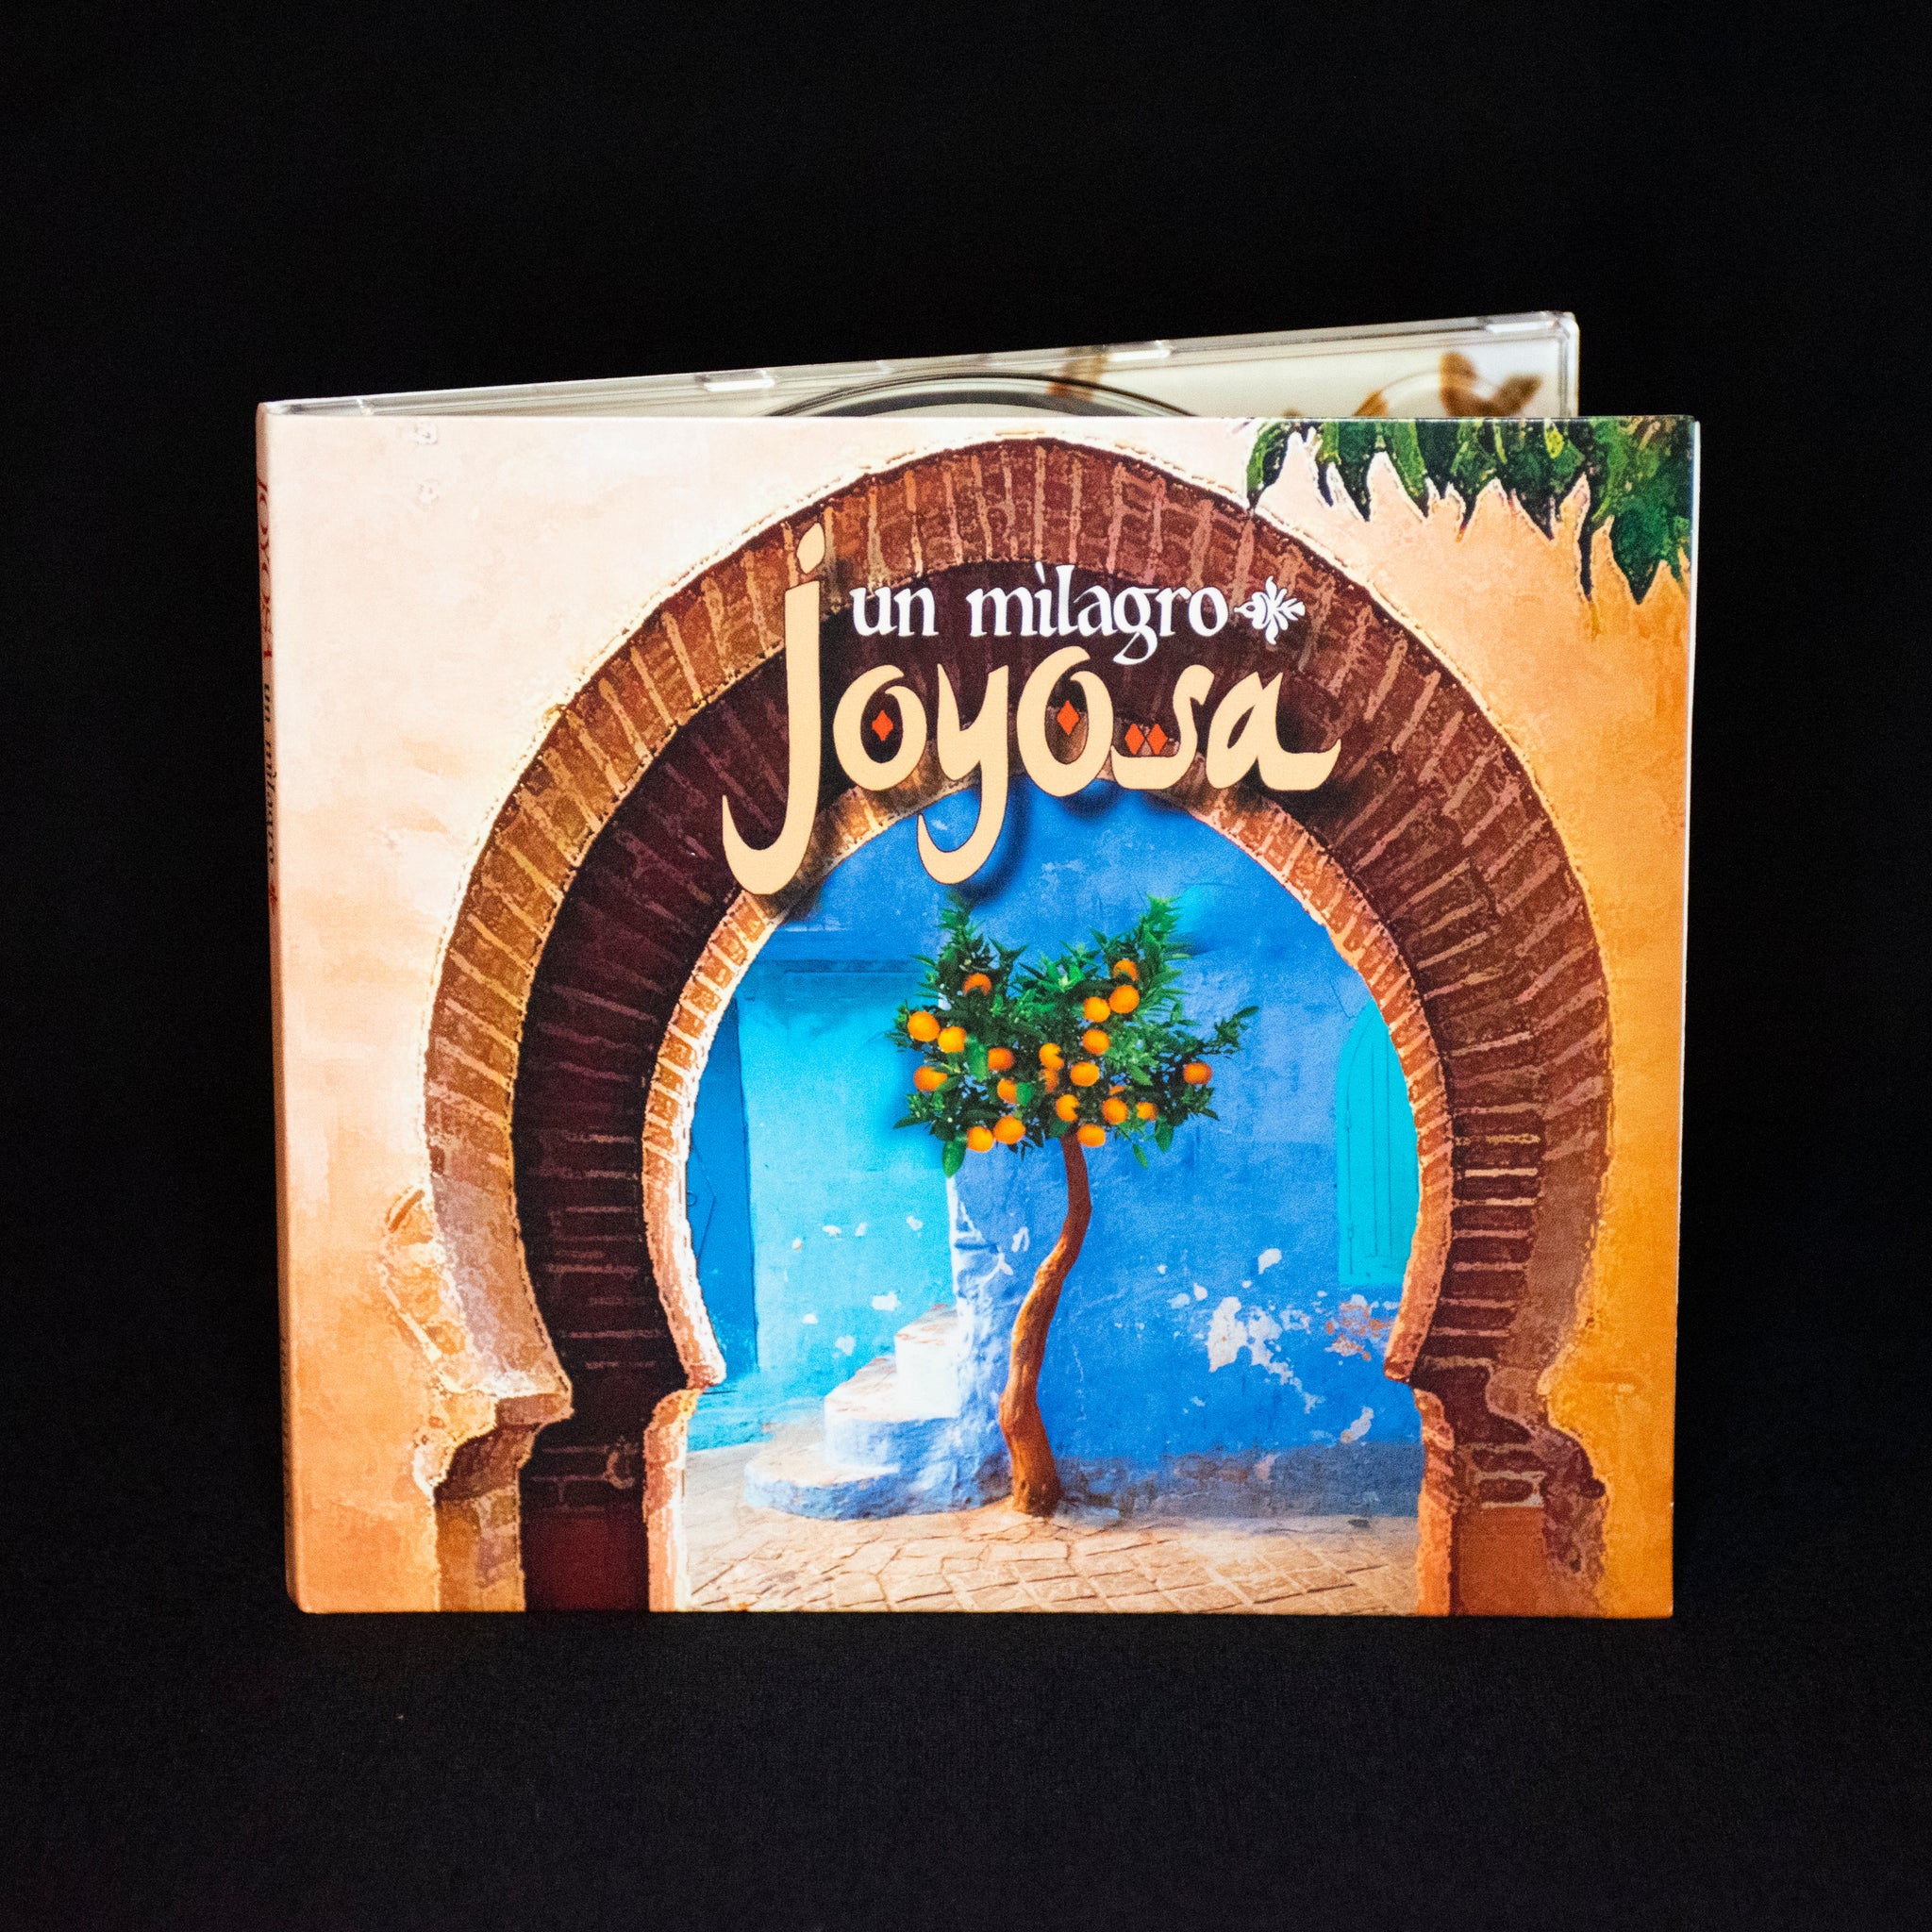 Joyosa - Un Milagro LP CD